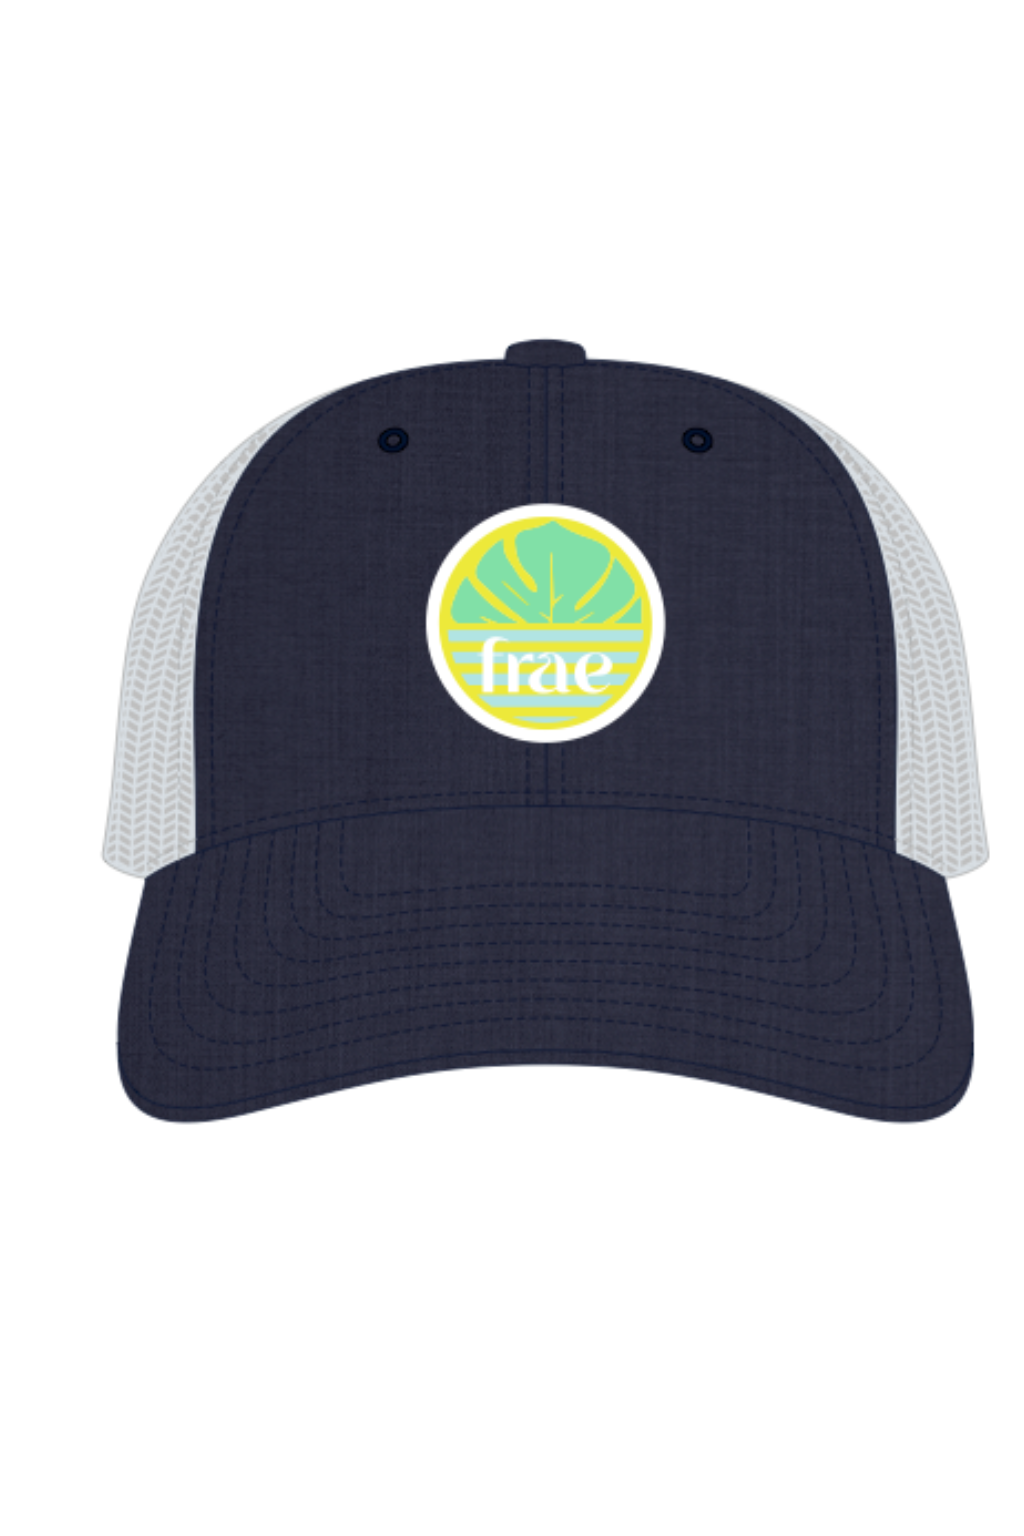 Frae Trucker Hat